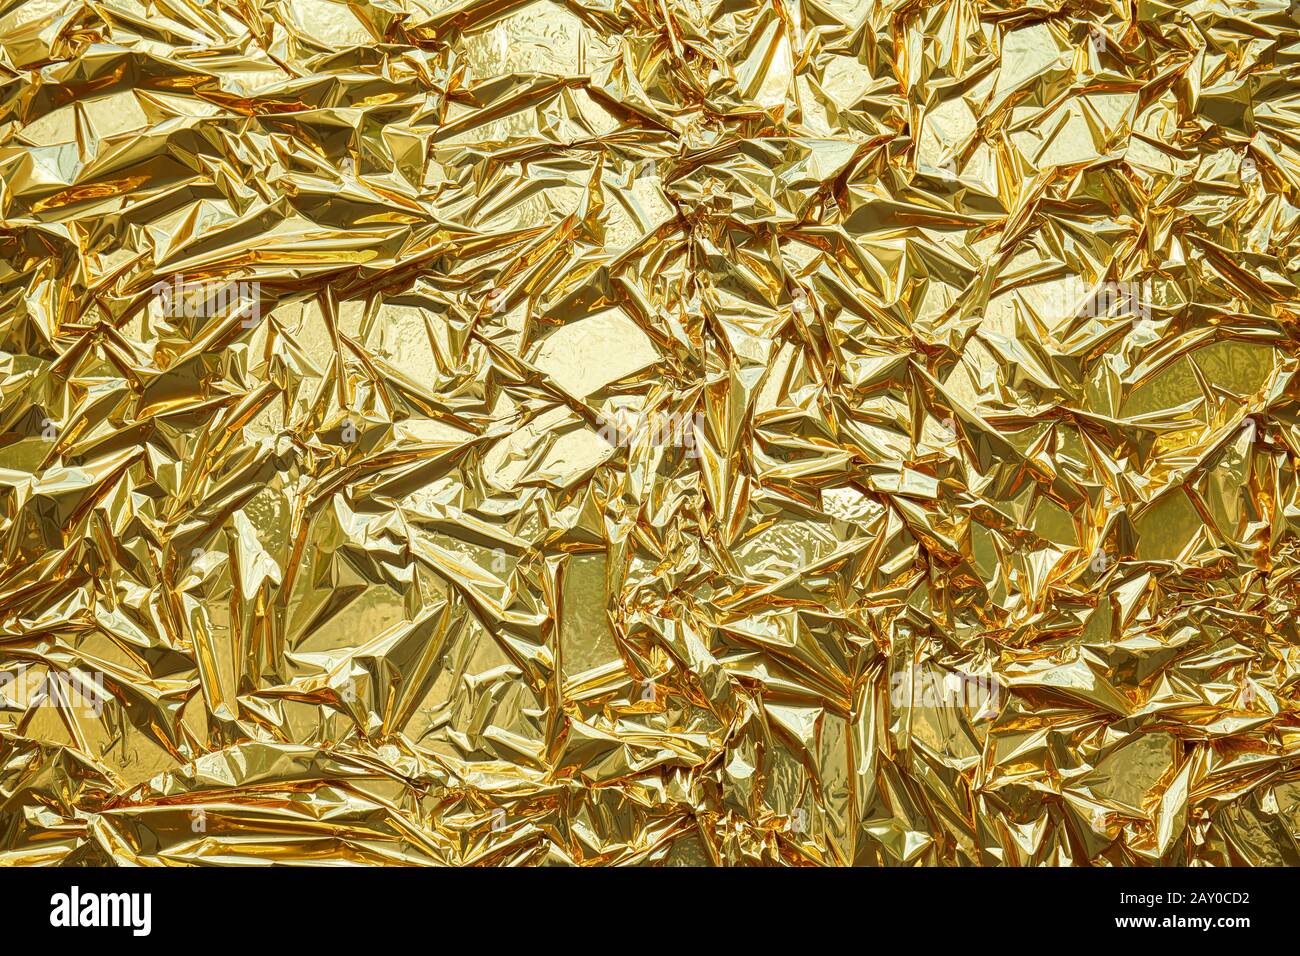 https://c8.alamy.com/comp/2AY0CD2/crumpled-gold-metallic-foil-texture-background-2AY0CD2.jpg